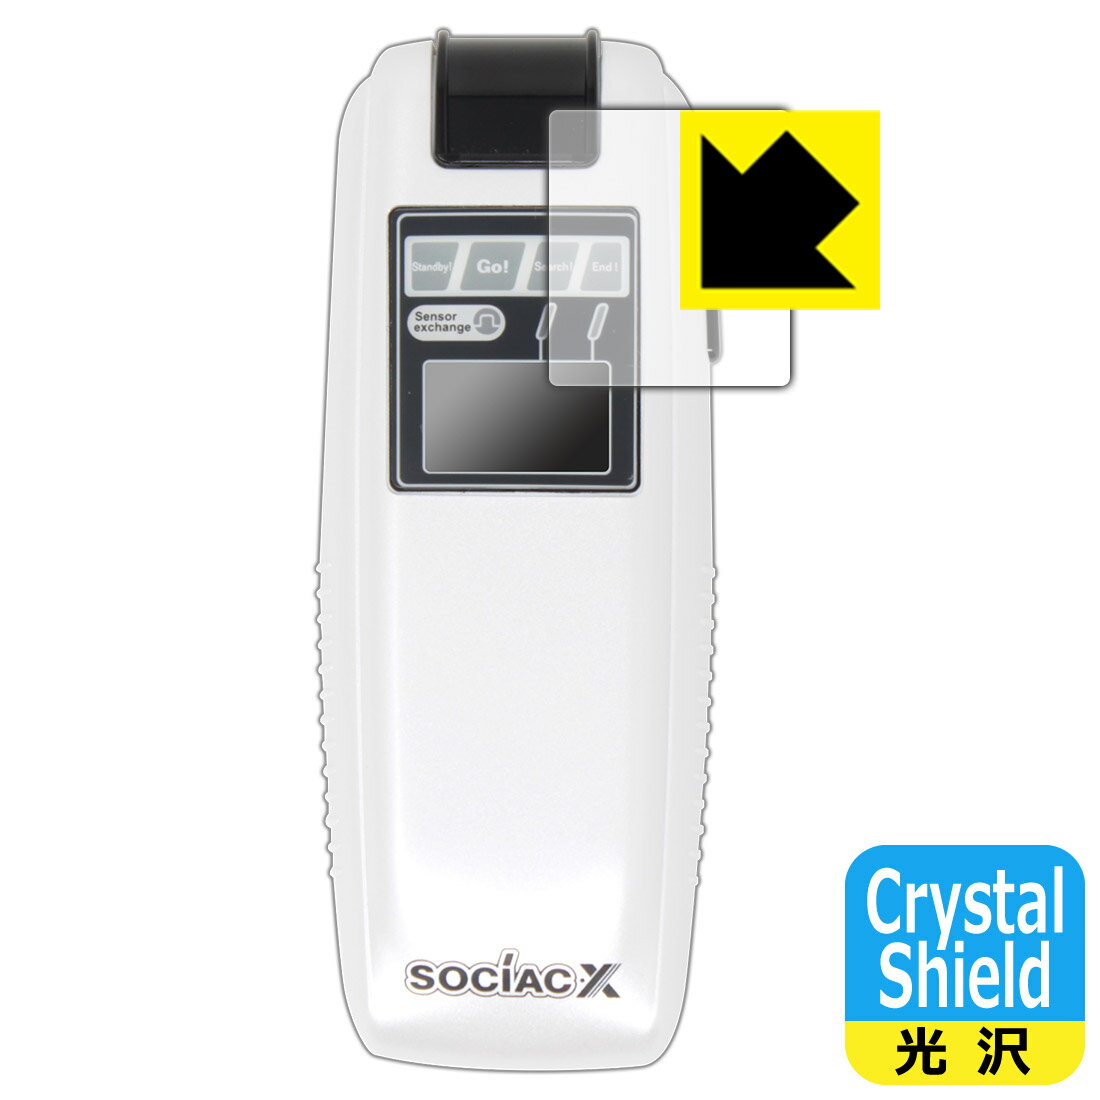 SOCIAC(\VAbN) SC-103 / SOCIAC X(\VAbNEGbNX) SC-202 p Crystal ShieldyzیtB { А